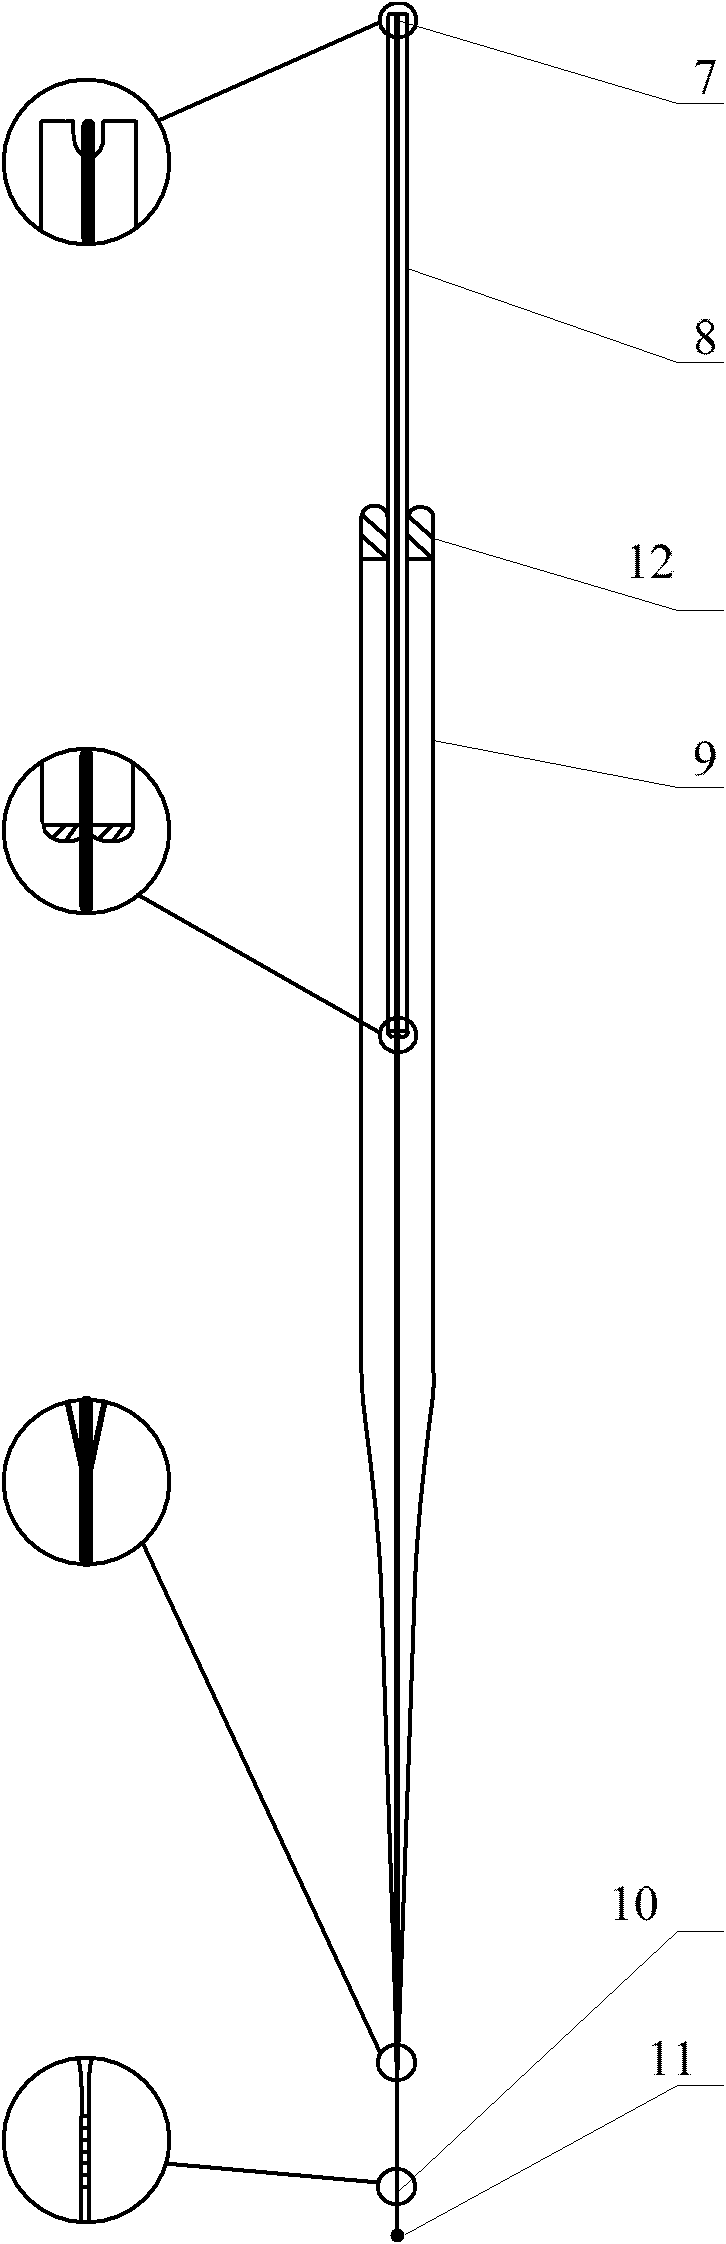 Micro-longhole measuring method based on fiber grating